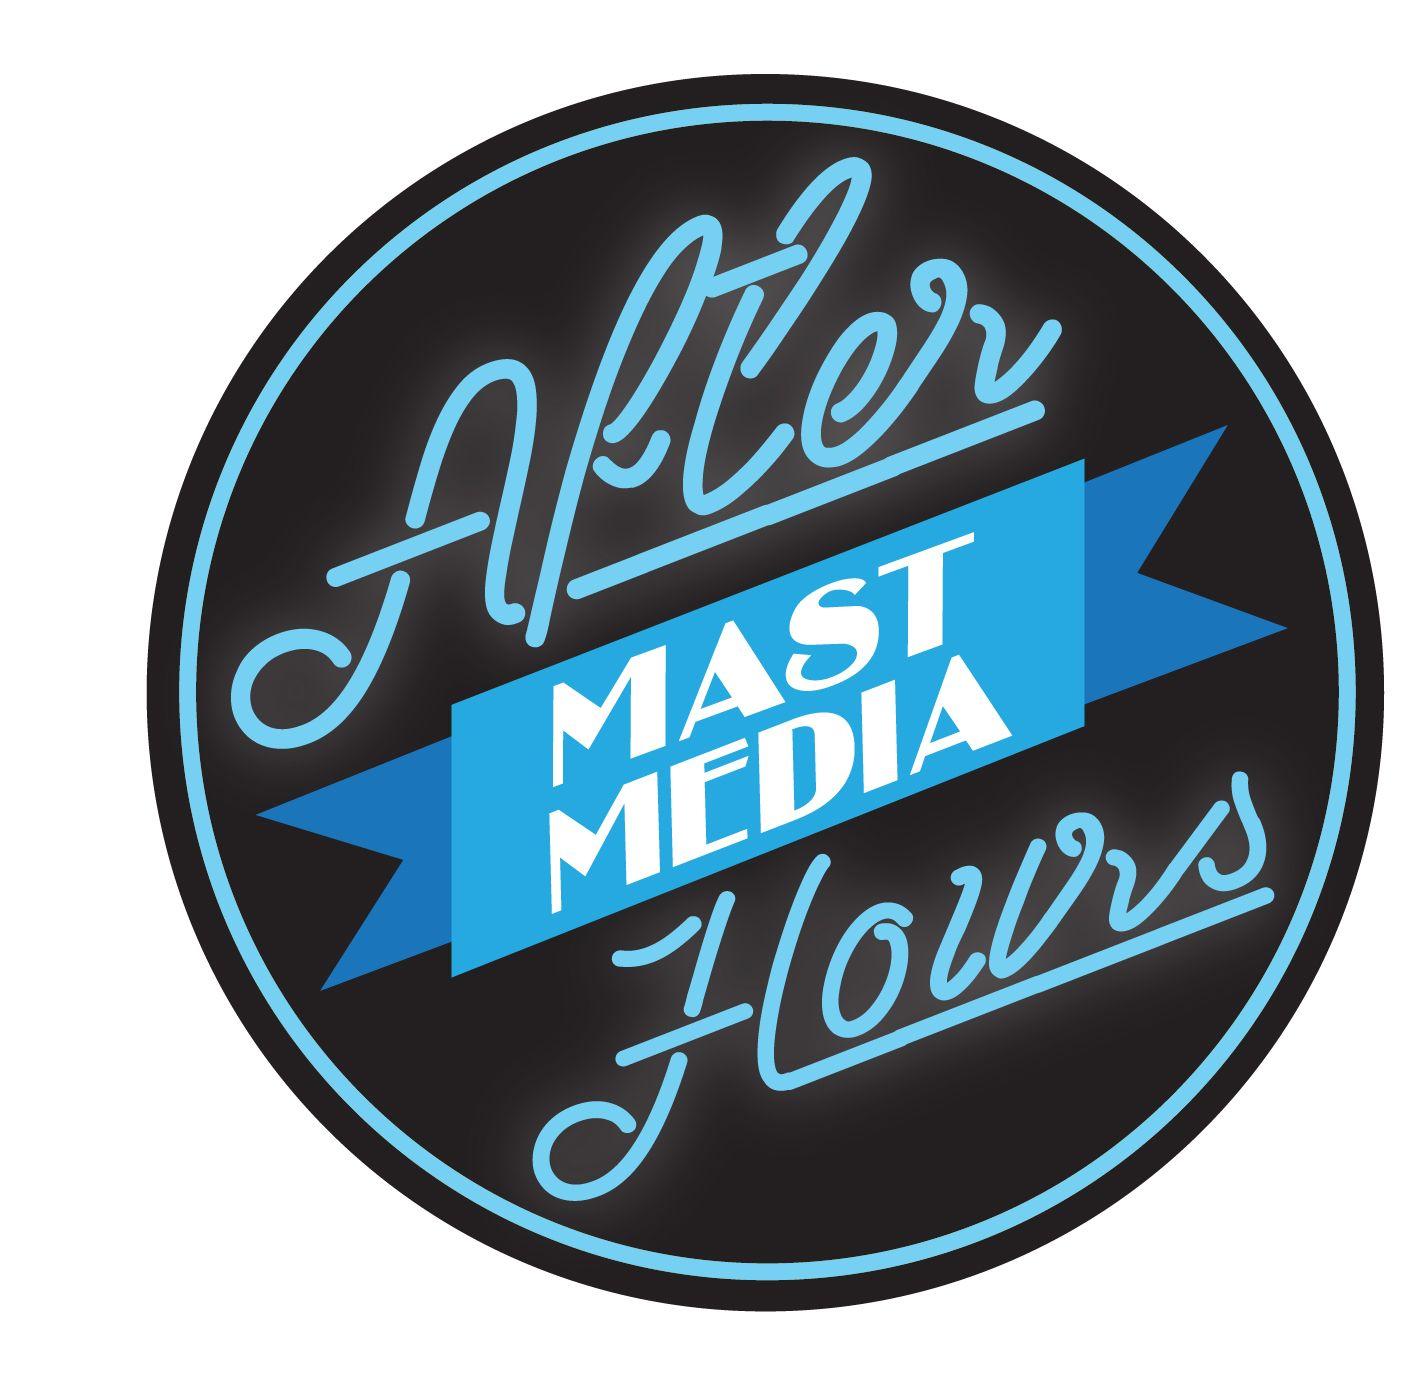 Radio Show Logo - Mast Radio Show Logos – therealcdubs